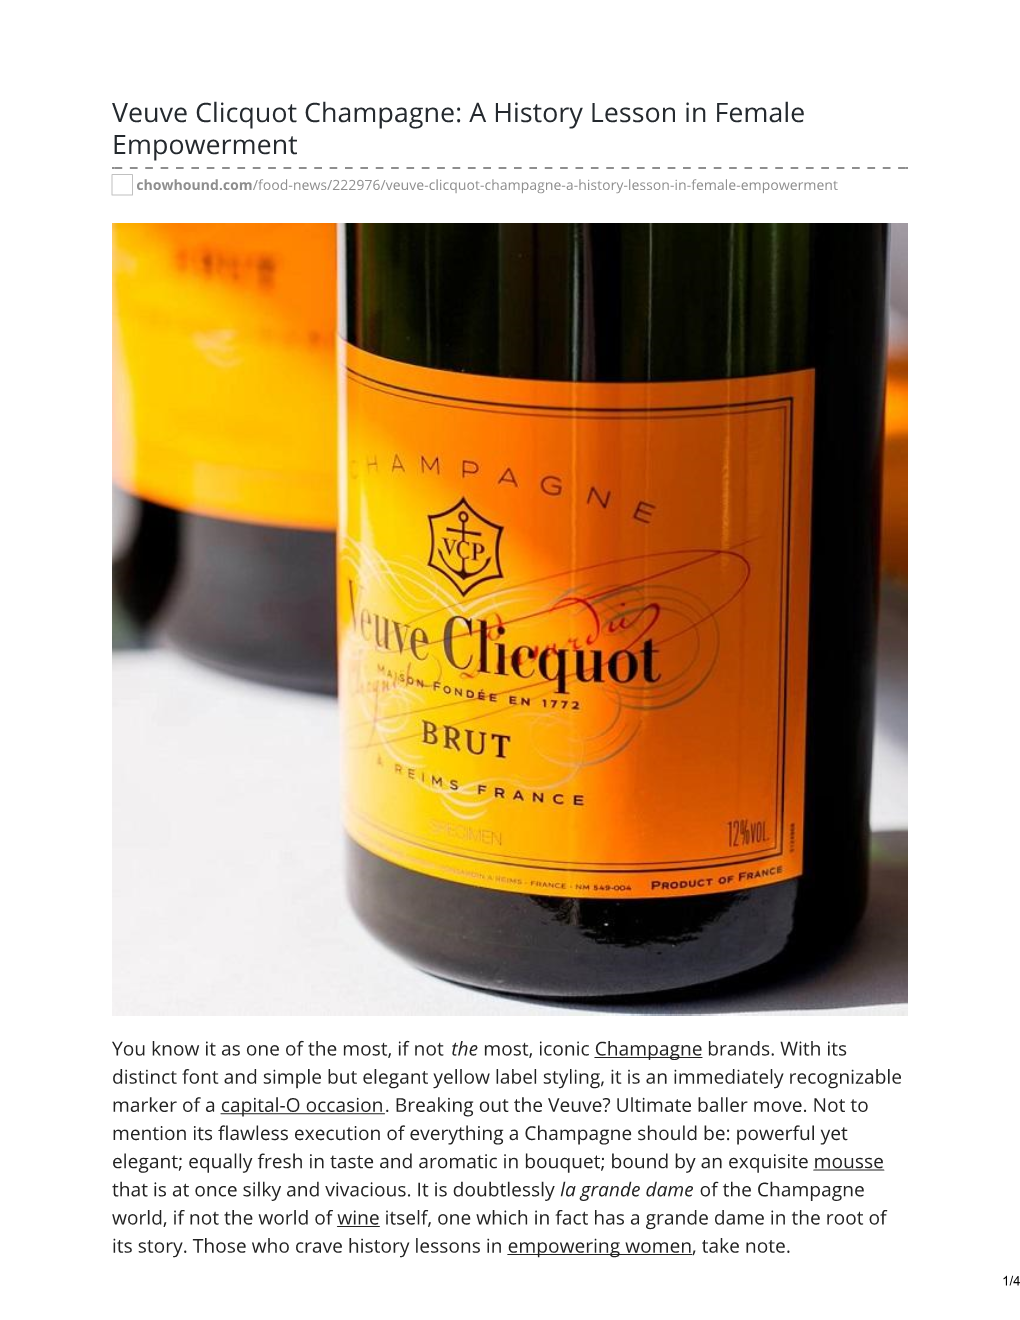 Veuve Clicquot Champagne: a History Lesson in Female Empowerment